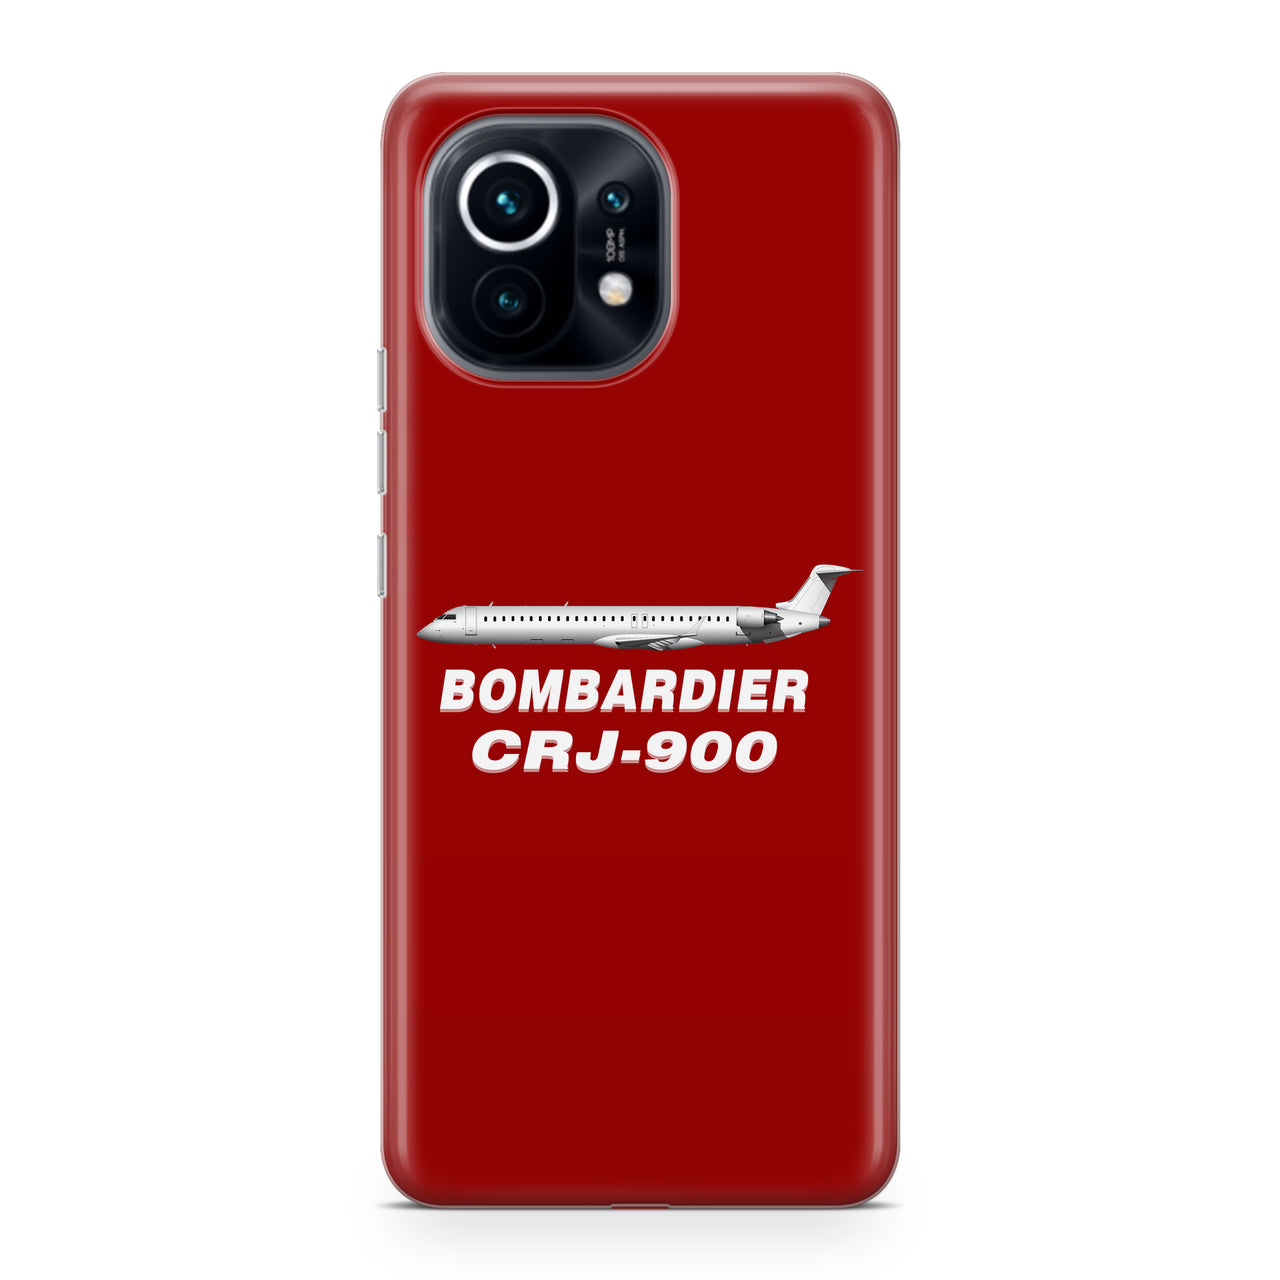 Bombardier CRJ-900 Designed Xiaomi Cases